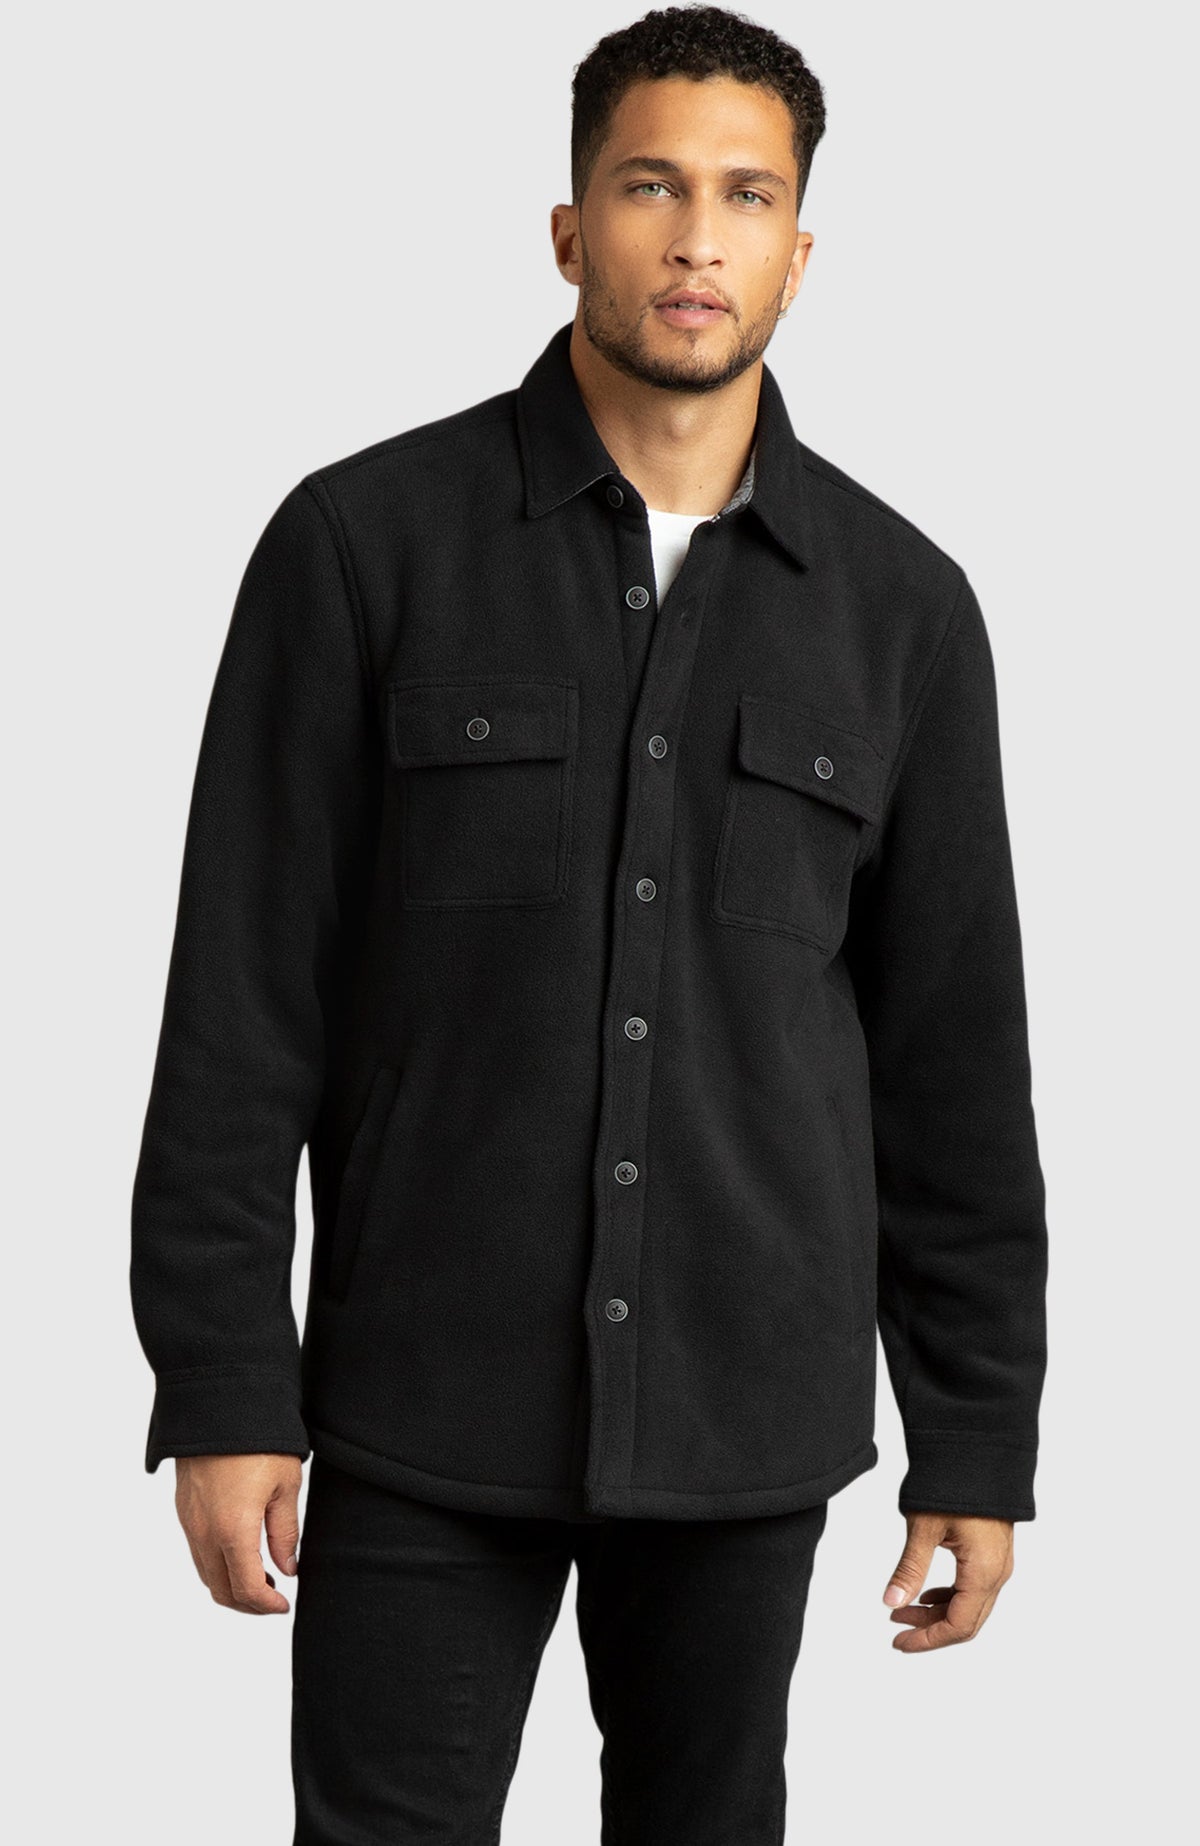 Black Polar Fleece Shirt Jacket for Men - Front